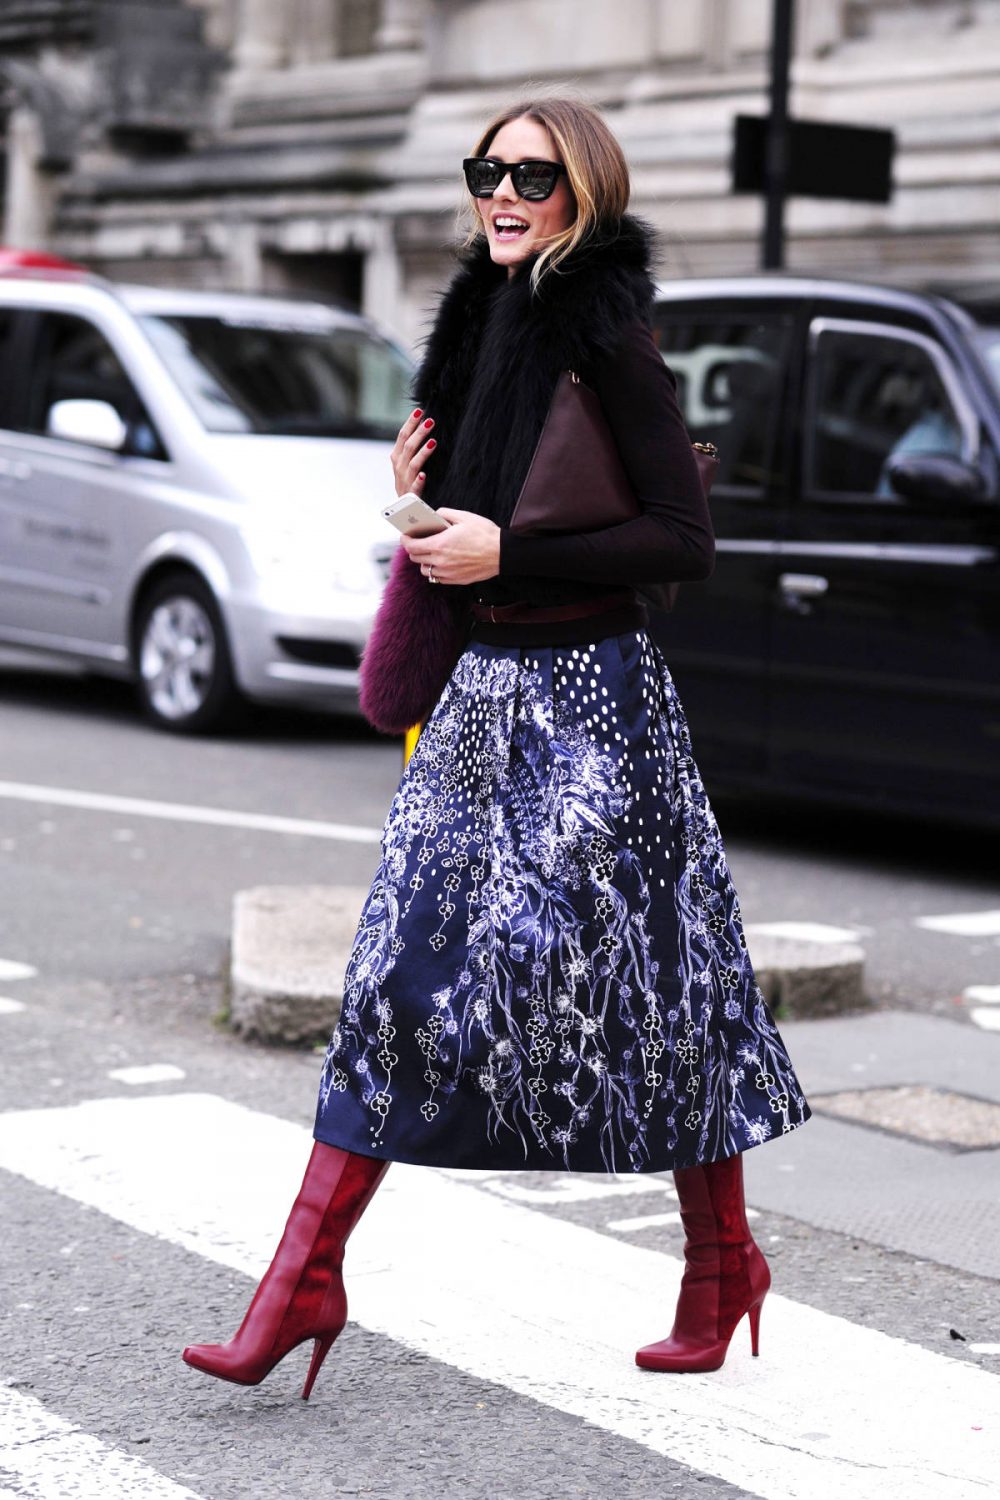 Style Inspiration: Midi Skirts & Knee Boots